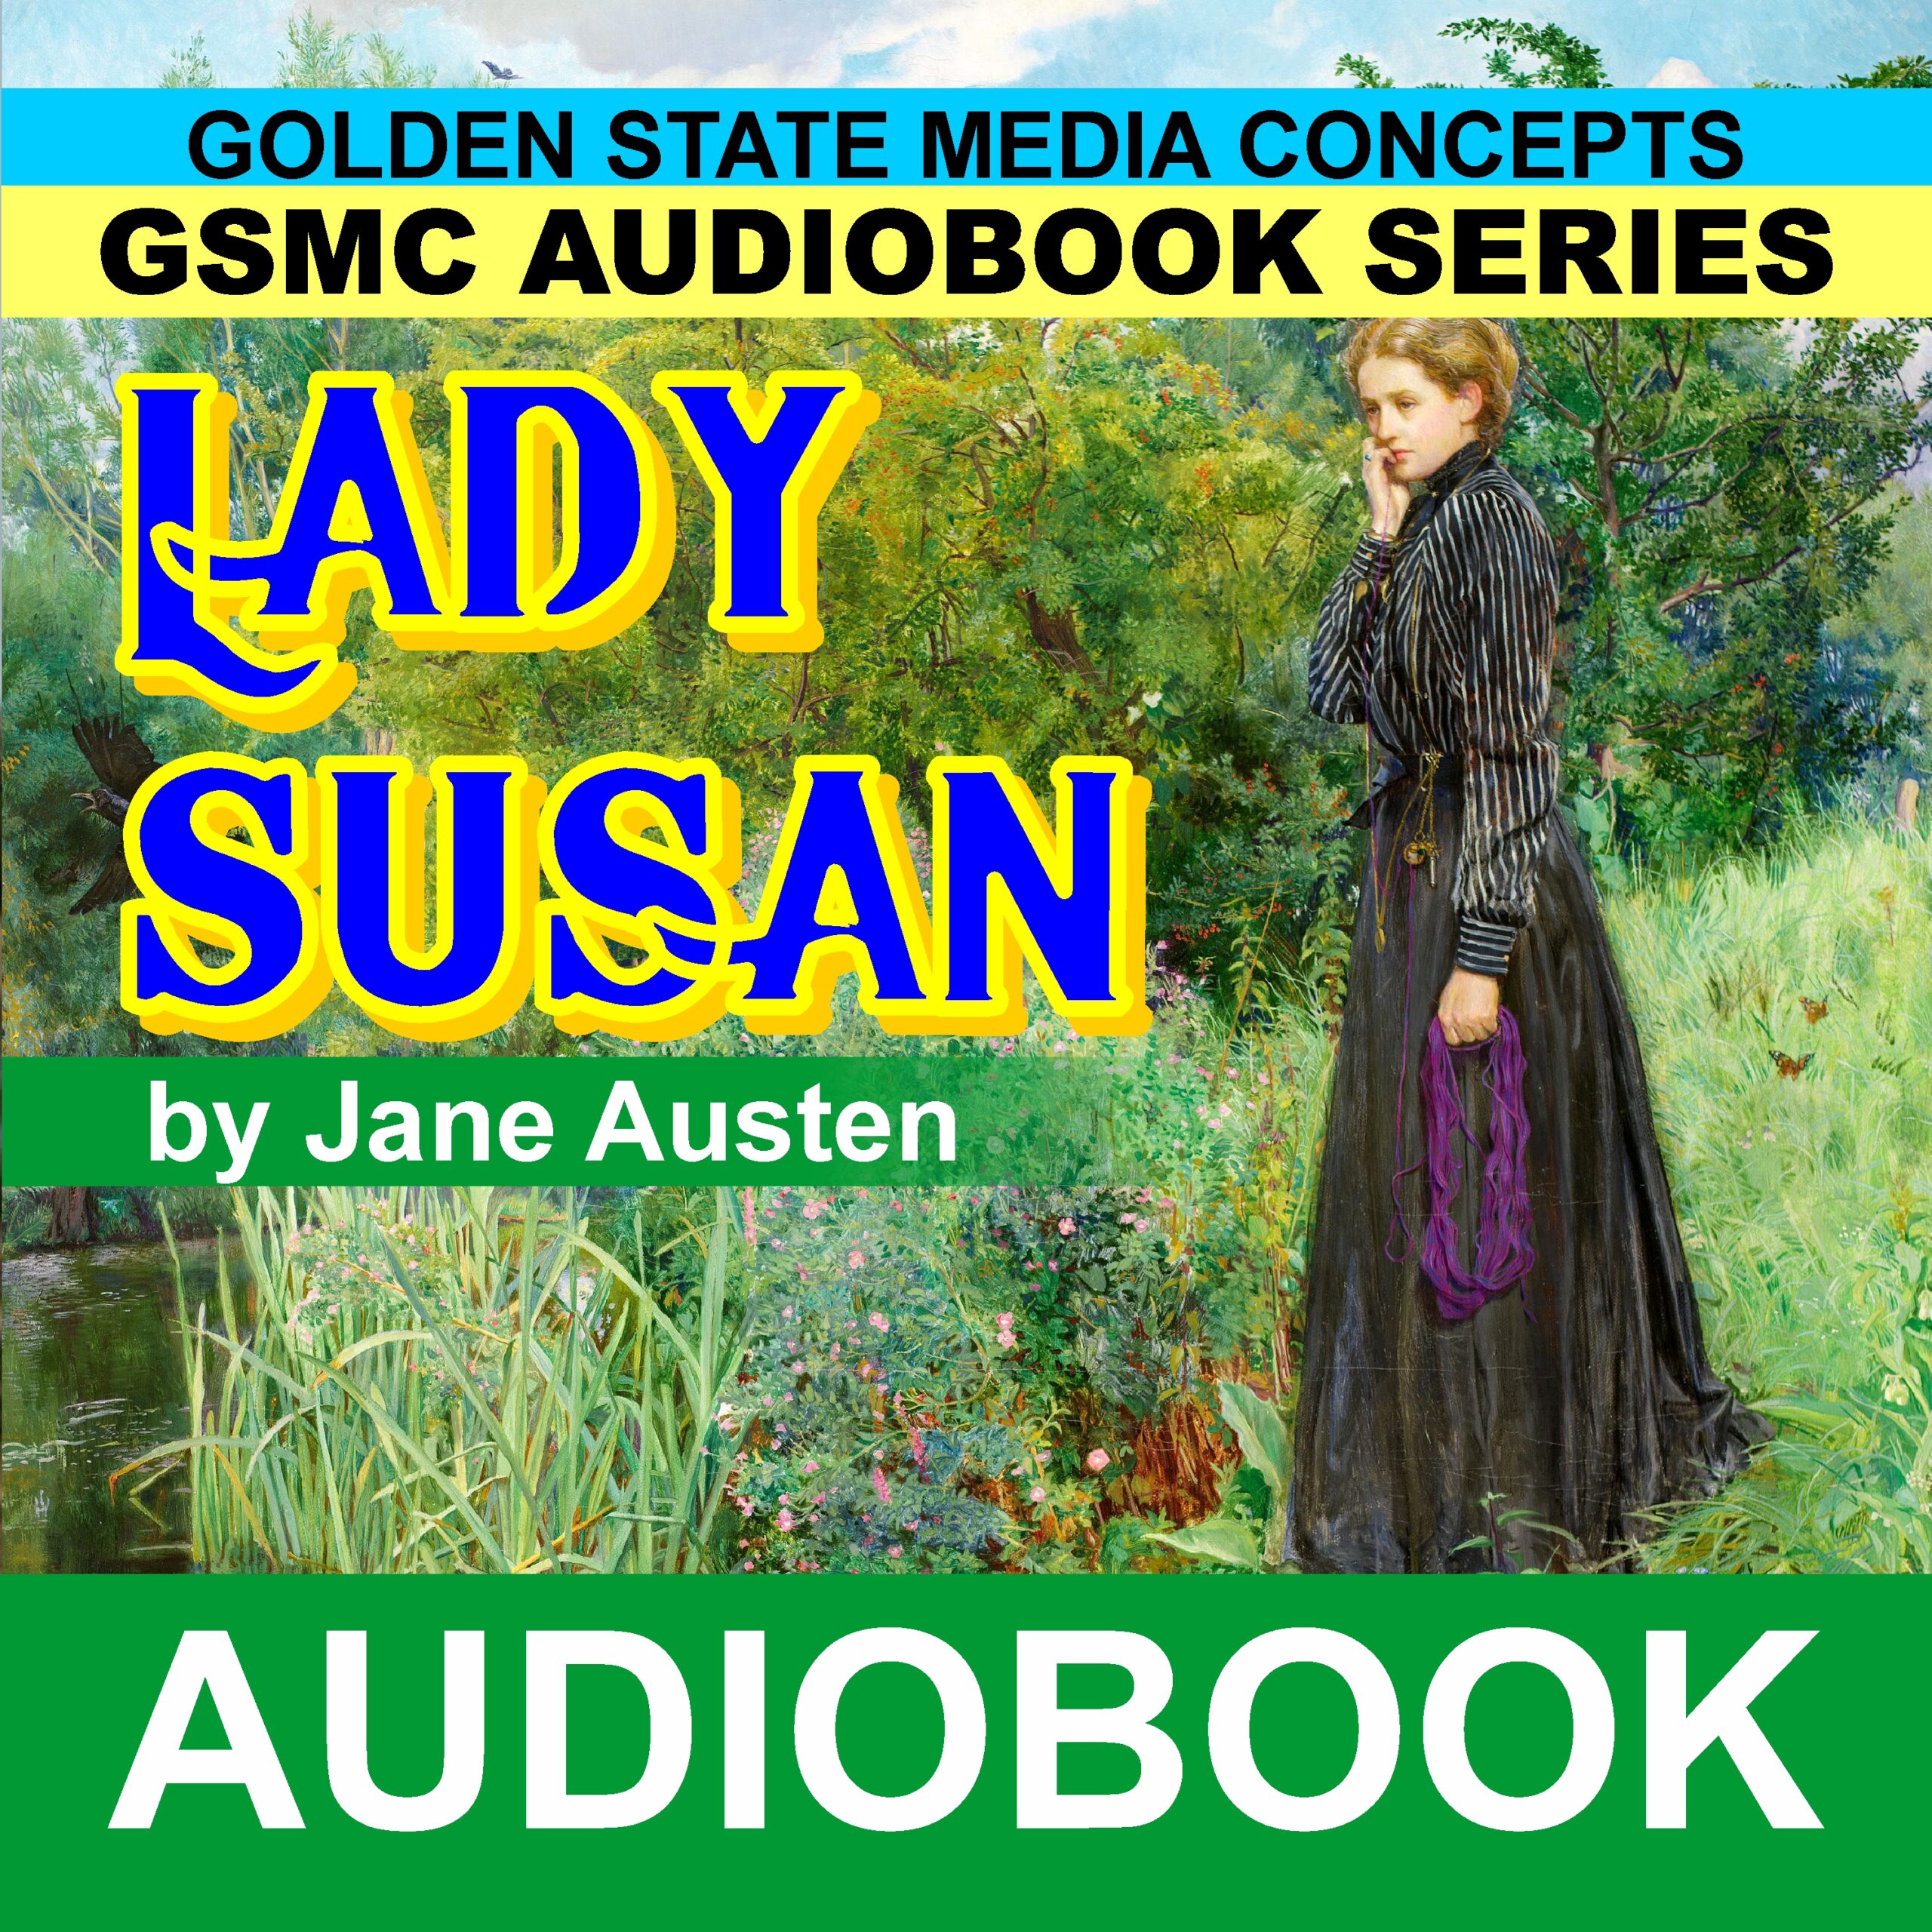 GSMC Audiobook Series: Lady Susan by Jane Austen